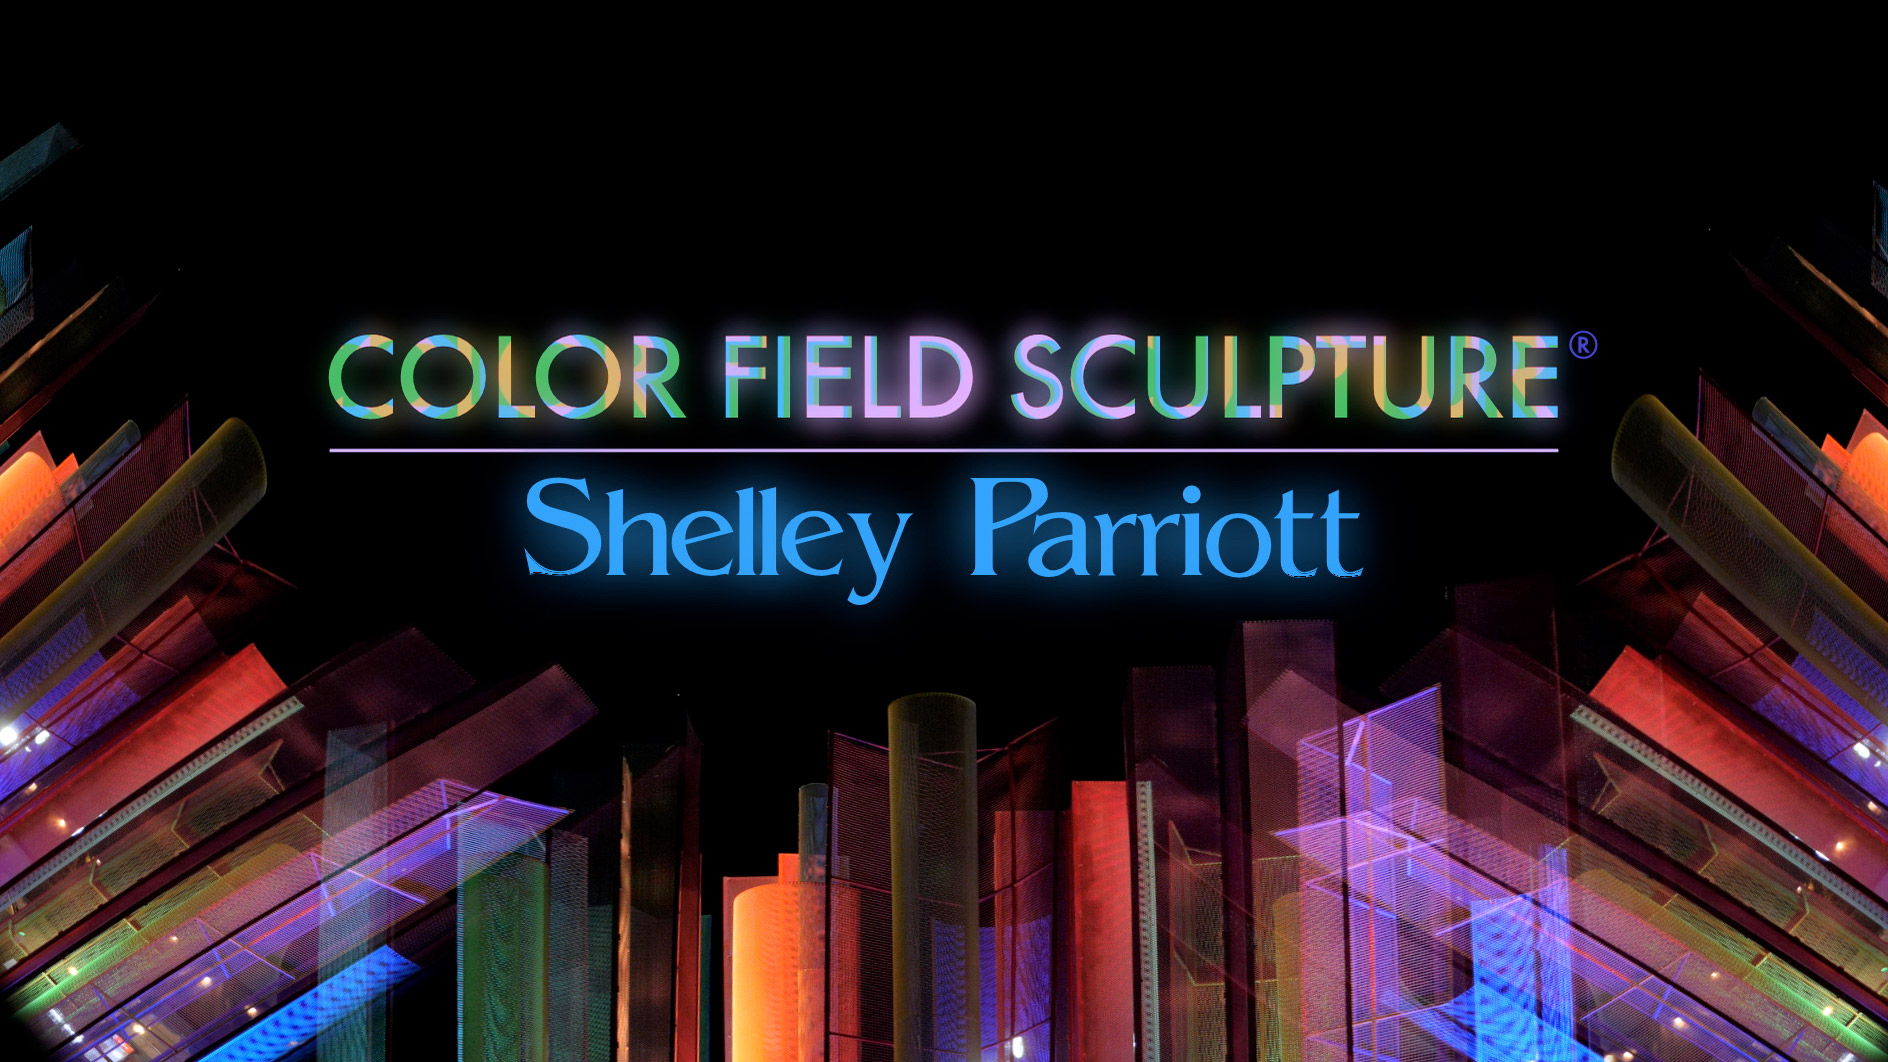 Colorfield Sculpture by Hudson Valley artist, Shelley Parriott